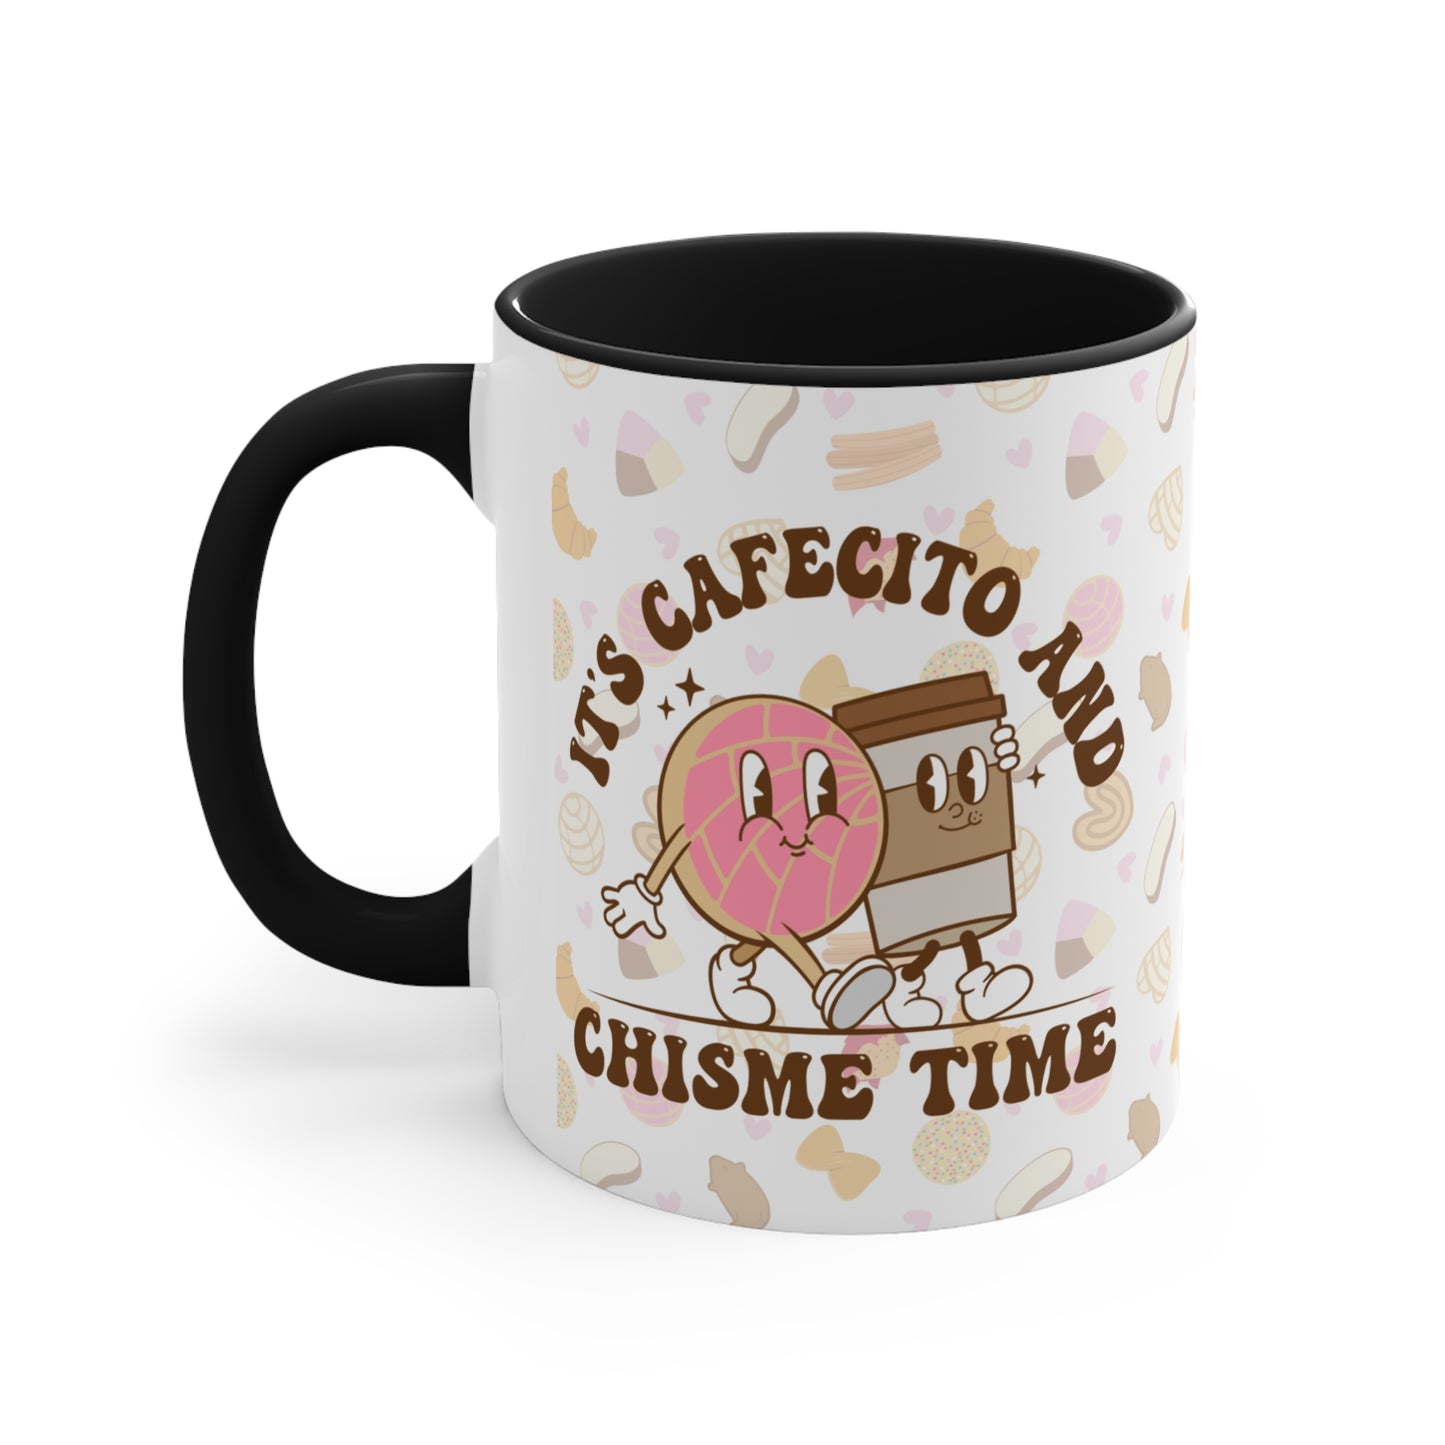 Cafecito y chisme time Coffee Mug, 11oz for Mexican and Latin friends. Concha coffee mug.